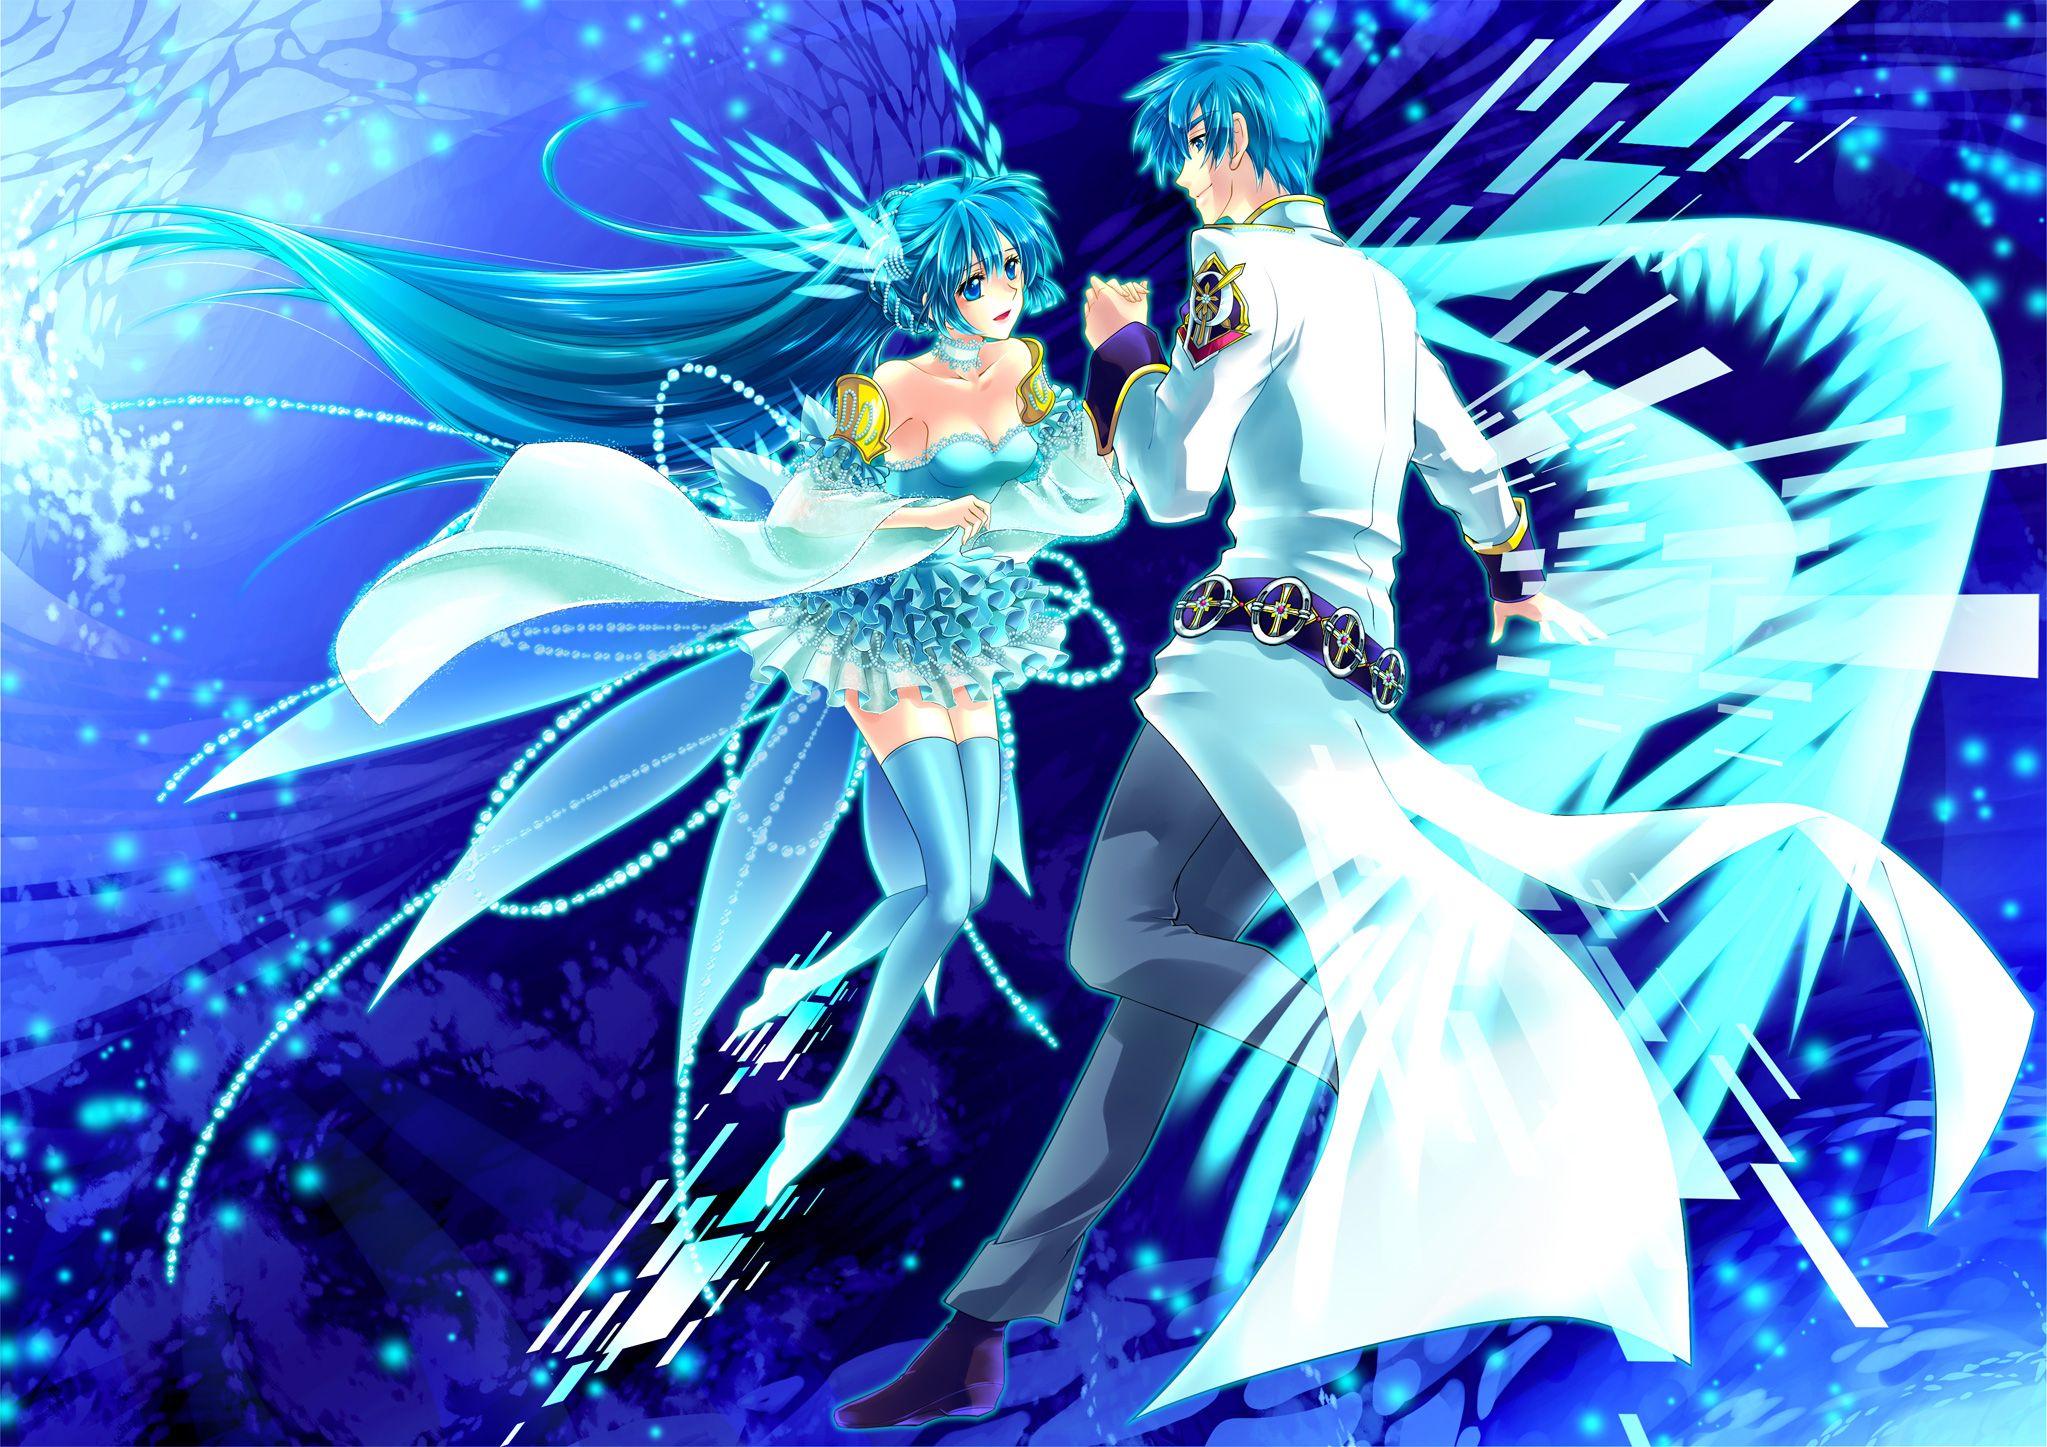 Download Dancing Anime Blue Wallpaper 2047x1447. Full HD